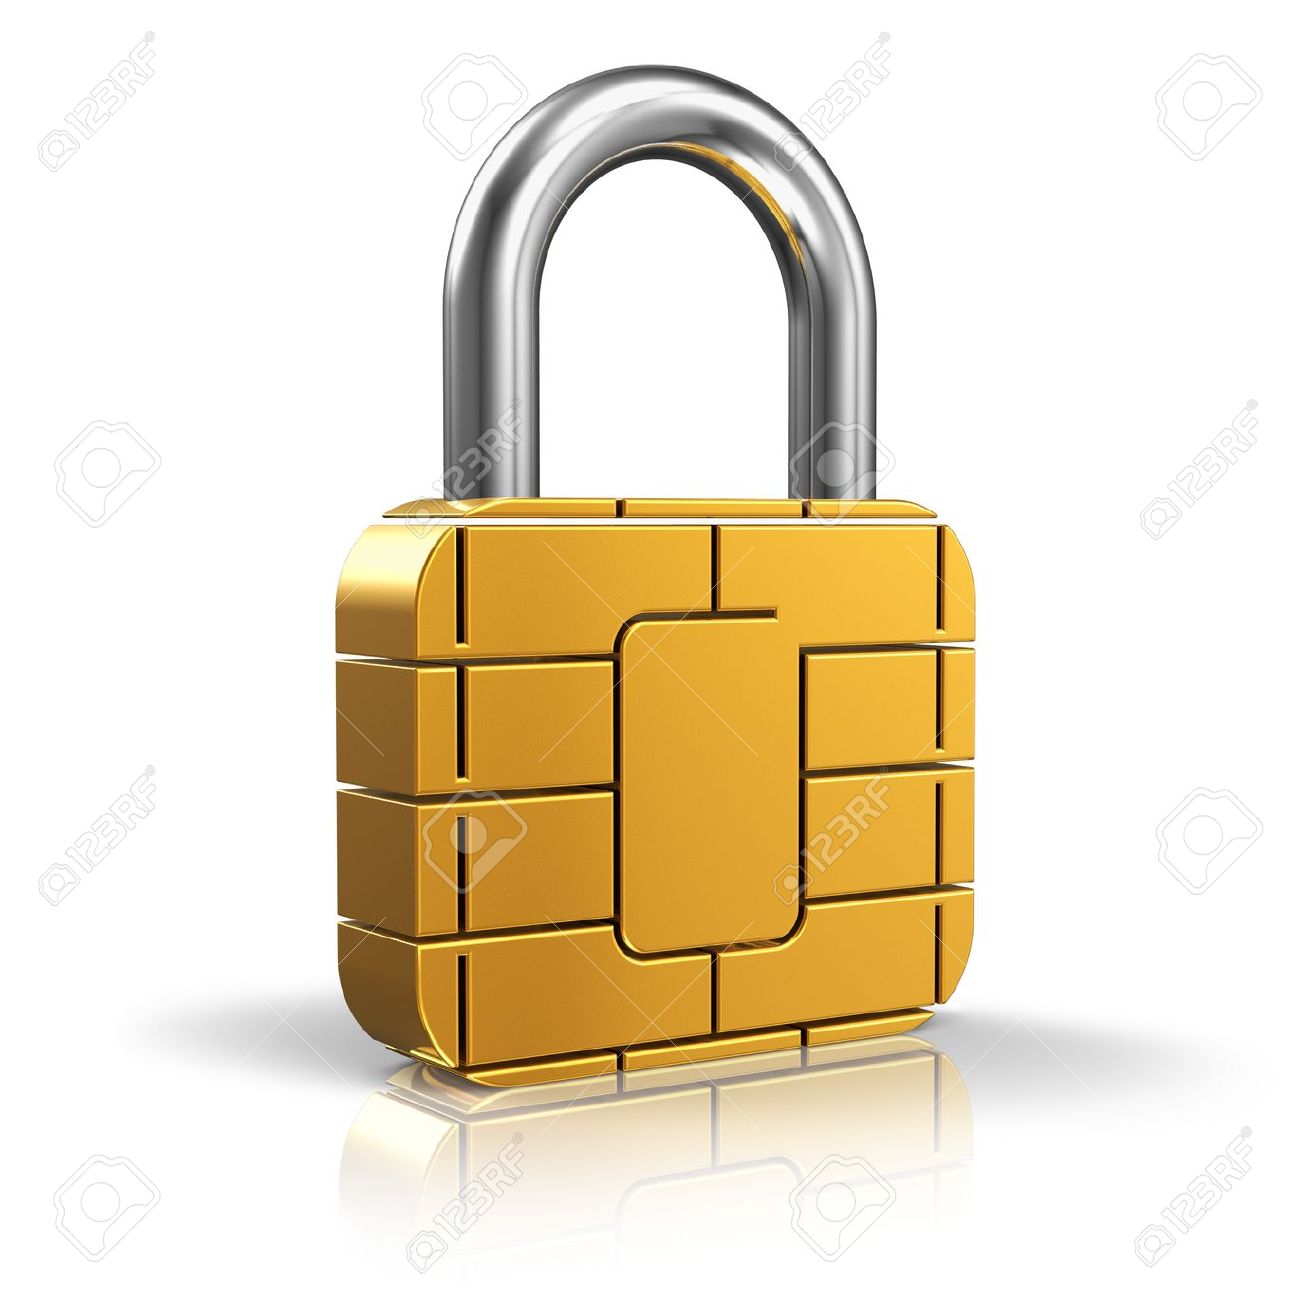 15494850 SIM card or credit card security concept golden padlock from card microchip isolated on white backgr Stock Photo | e-Sim Cards | Samsung และ Apple จับมือกับเครือข่ายมือถือพัฒนา Next-Gen SIM Card ให้เราสามารถเปลี่ยนค่ายมือถือได้เองในทันที